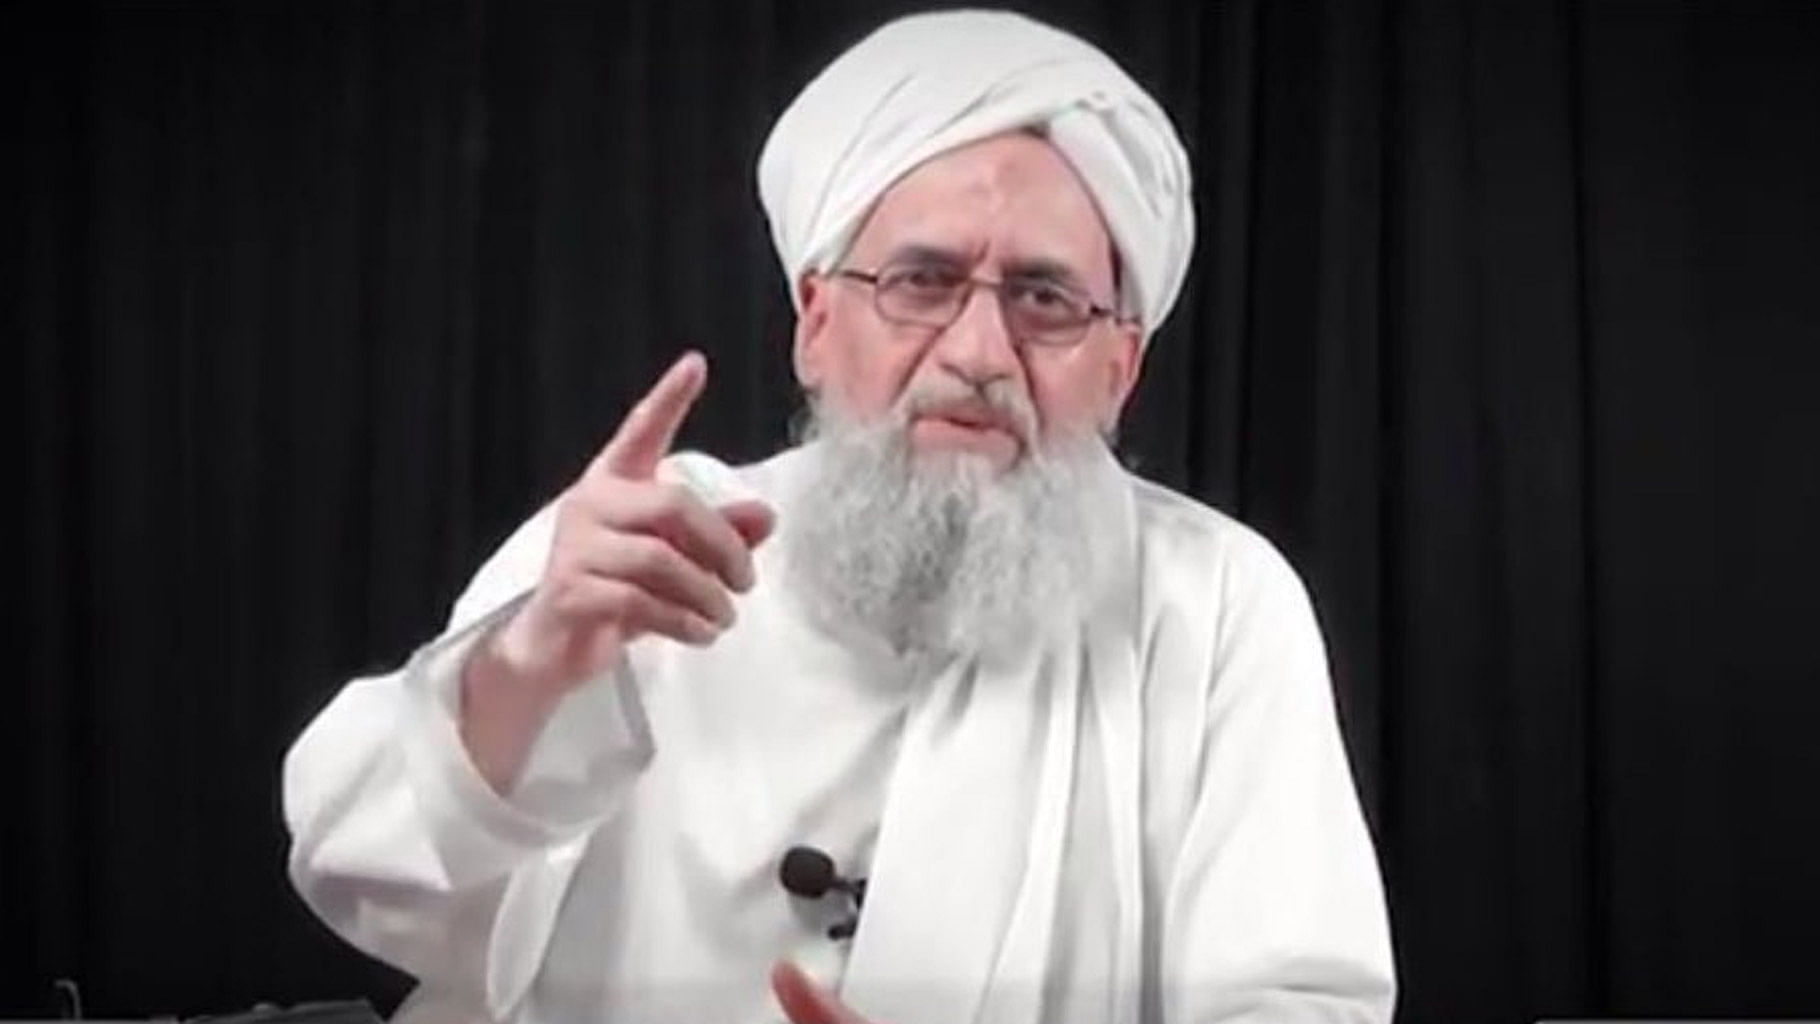 Al-Qaeda chief, Ayman al-Zawahiri. (Photo Courtesy: Twitter/<a href="https://twitter.com/Watcherone/status/774335978521583616">@Watchrone</a>)